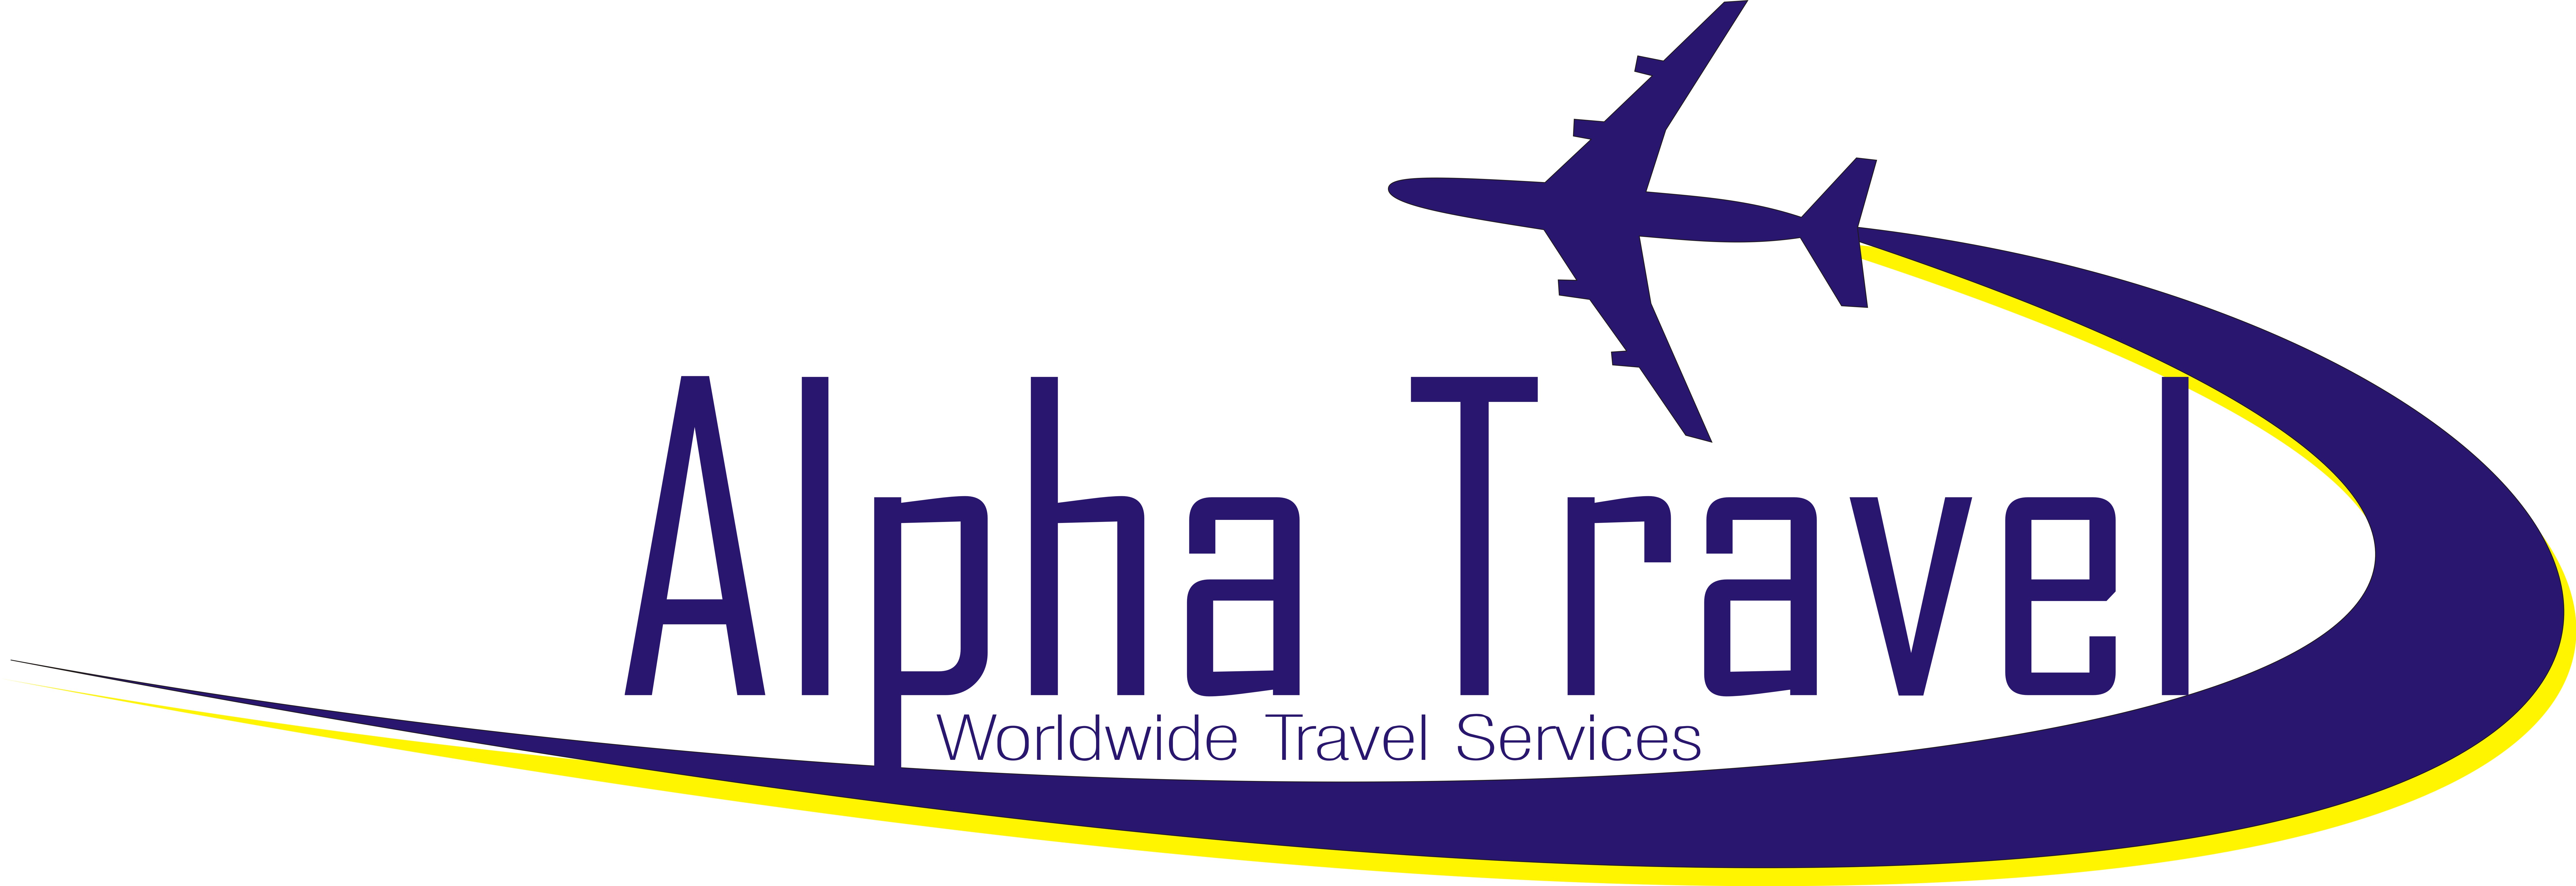 ALPHA TRAVEL LOGO - Travel-PA